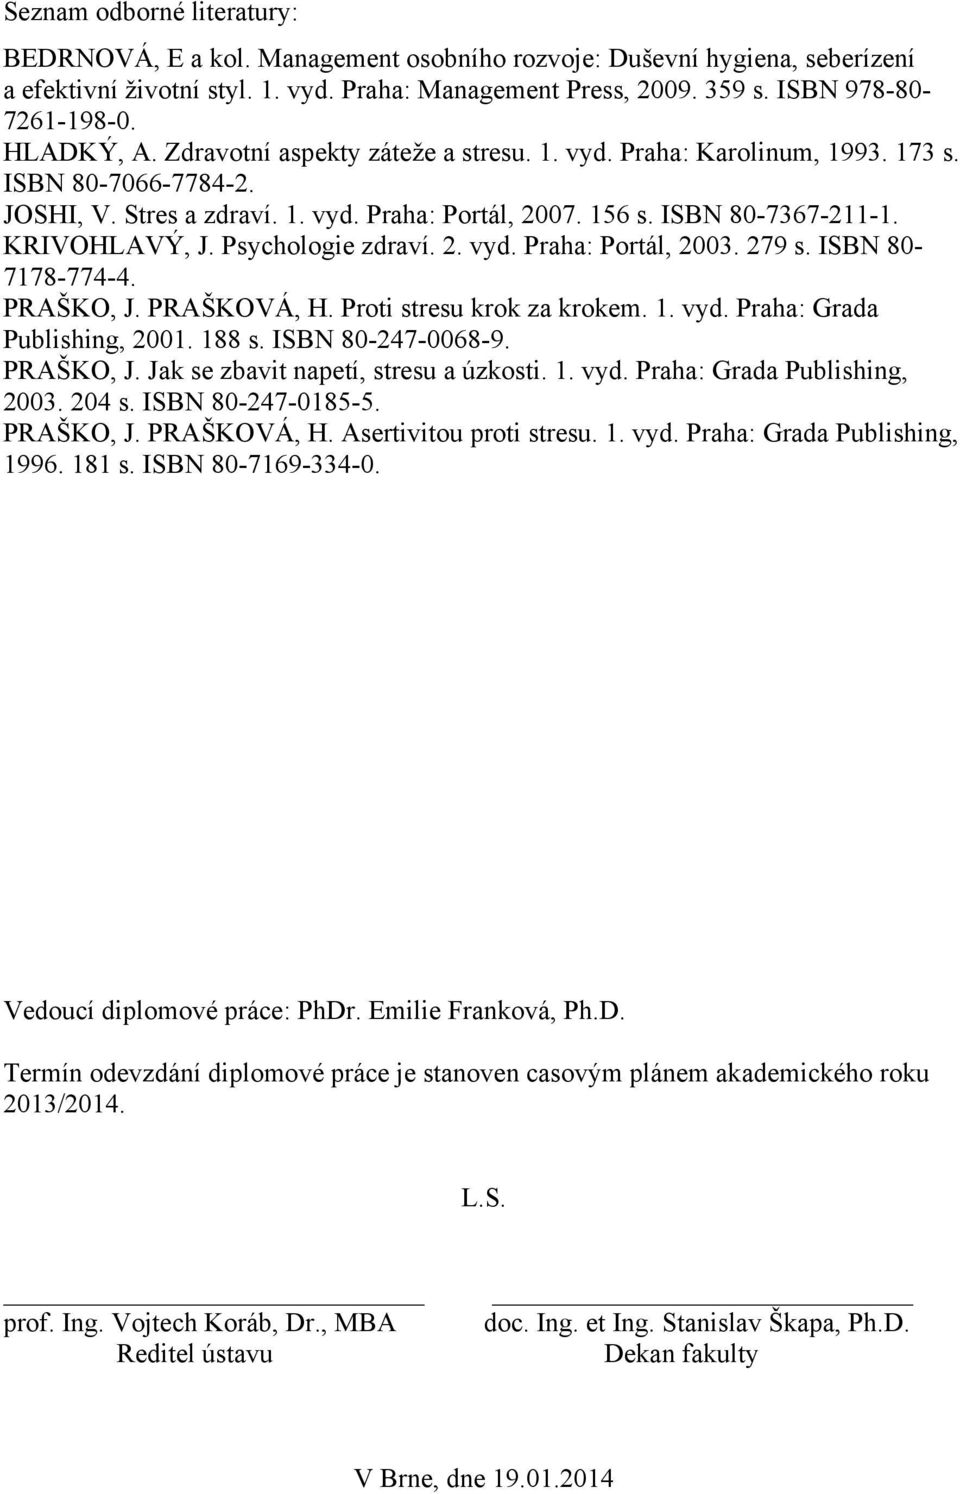 KRIVOHLAVÝ, J. Psychologie zdraví. 2. vyd. Praha: Portál, 2003. 279 s. ISBN 80-7178-774-4. PRAŠKO, J. PRAŠKOVÁ, H. Proti stresu krok za krokem. 1. vyd. Praha: Grada Publishing, 2001. 188 s.